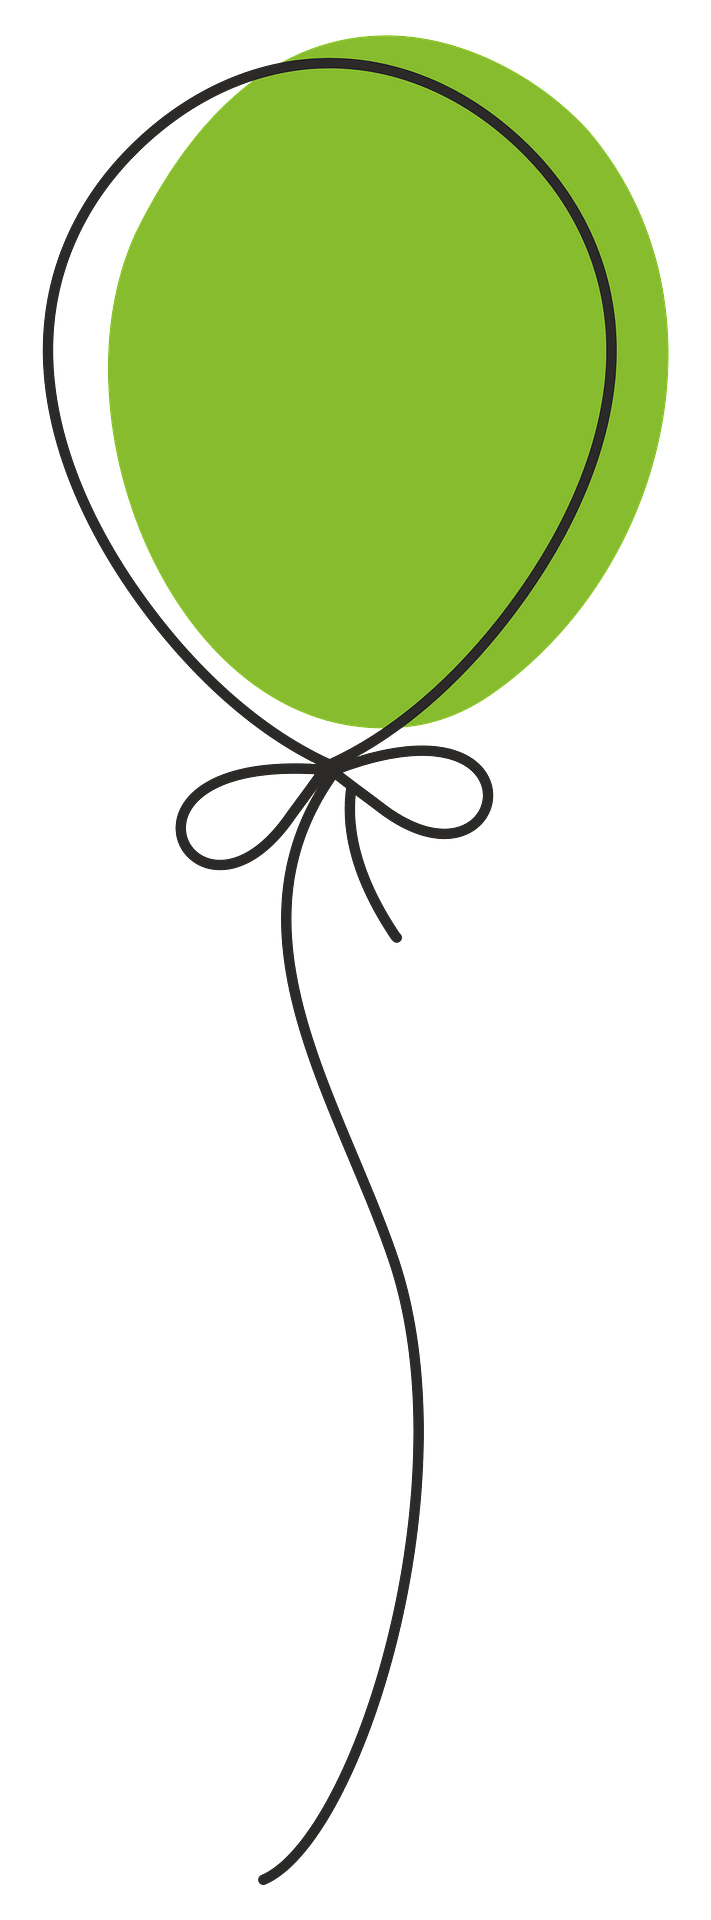 Geburtstagsgrünes Ballon-PNG-Bild